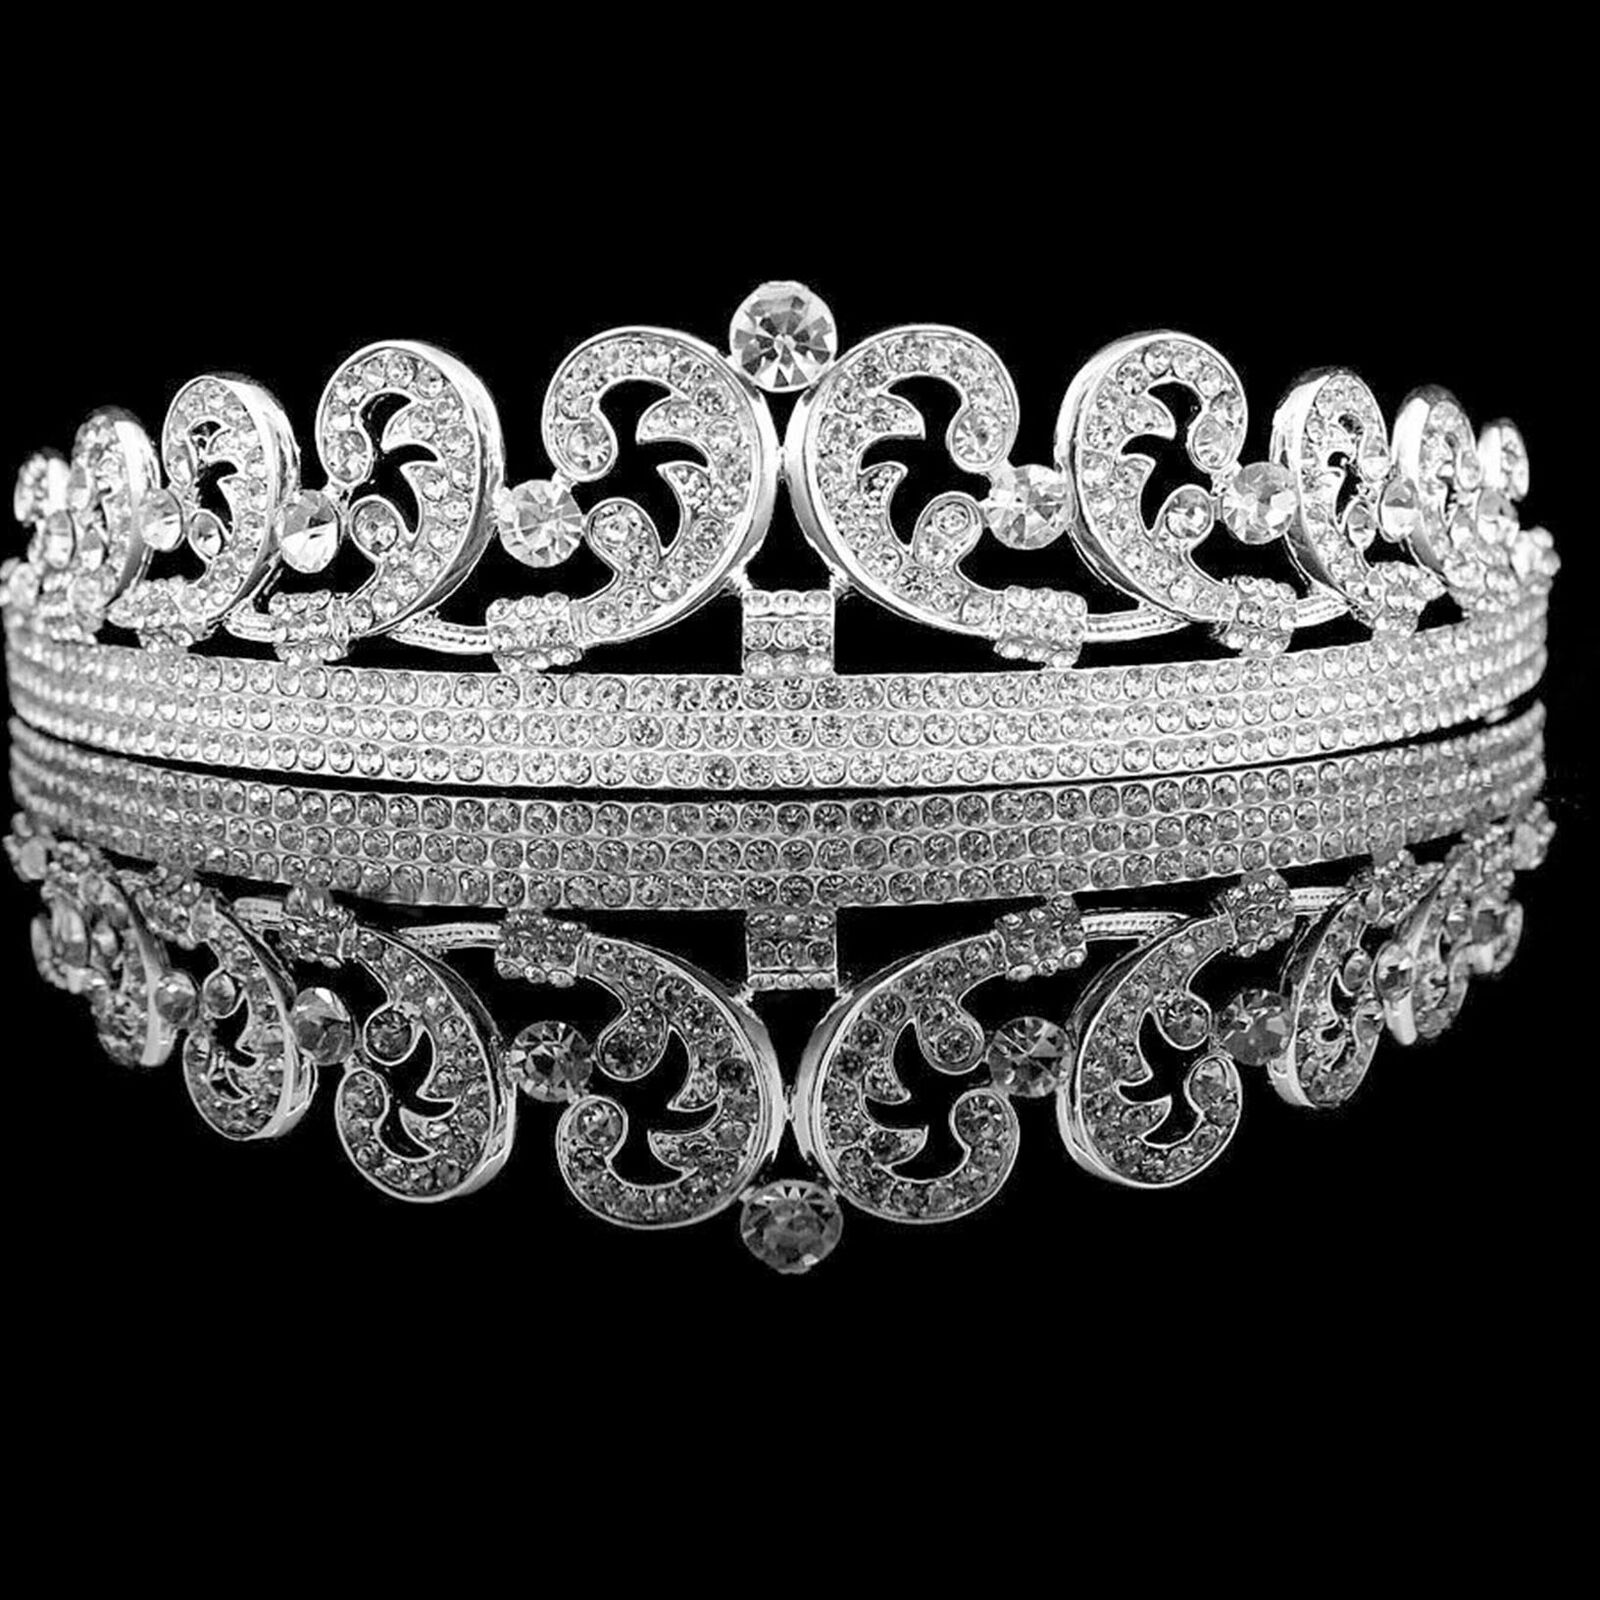 WomenCrystal Princess Wedding Bridal Crown Hair Accessory